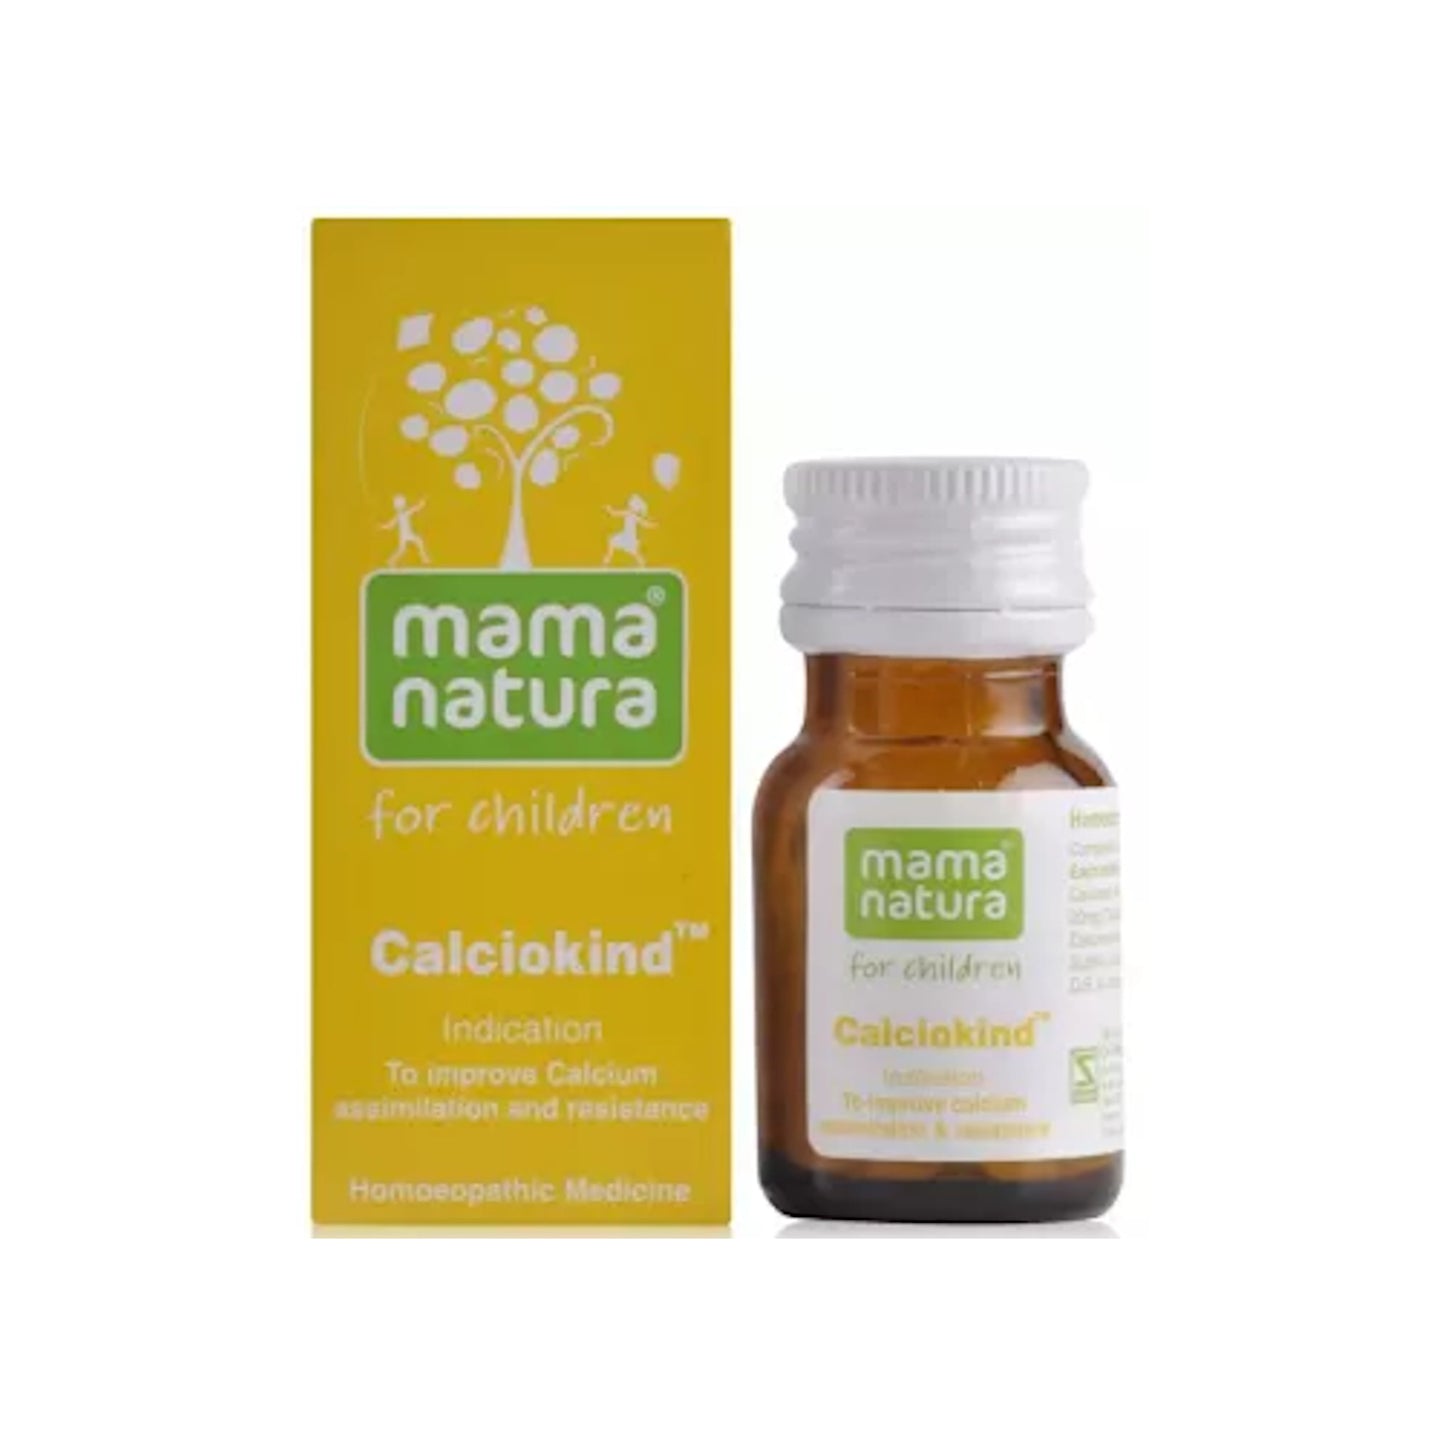 Dr. Schwabe Homeopathy - Calciokind Globules 10 g